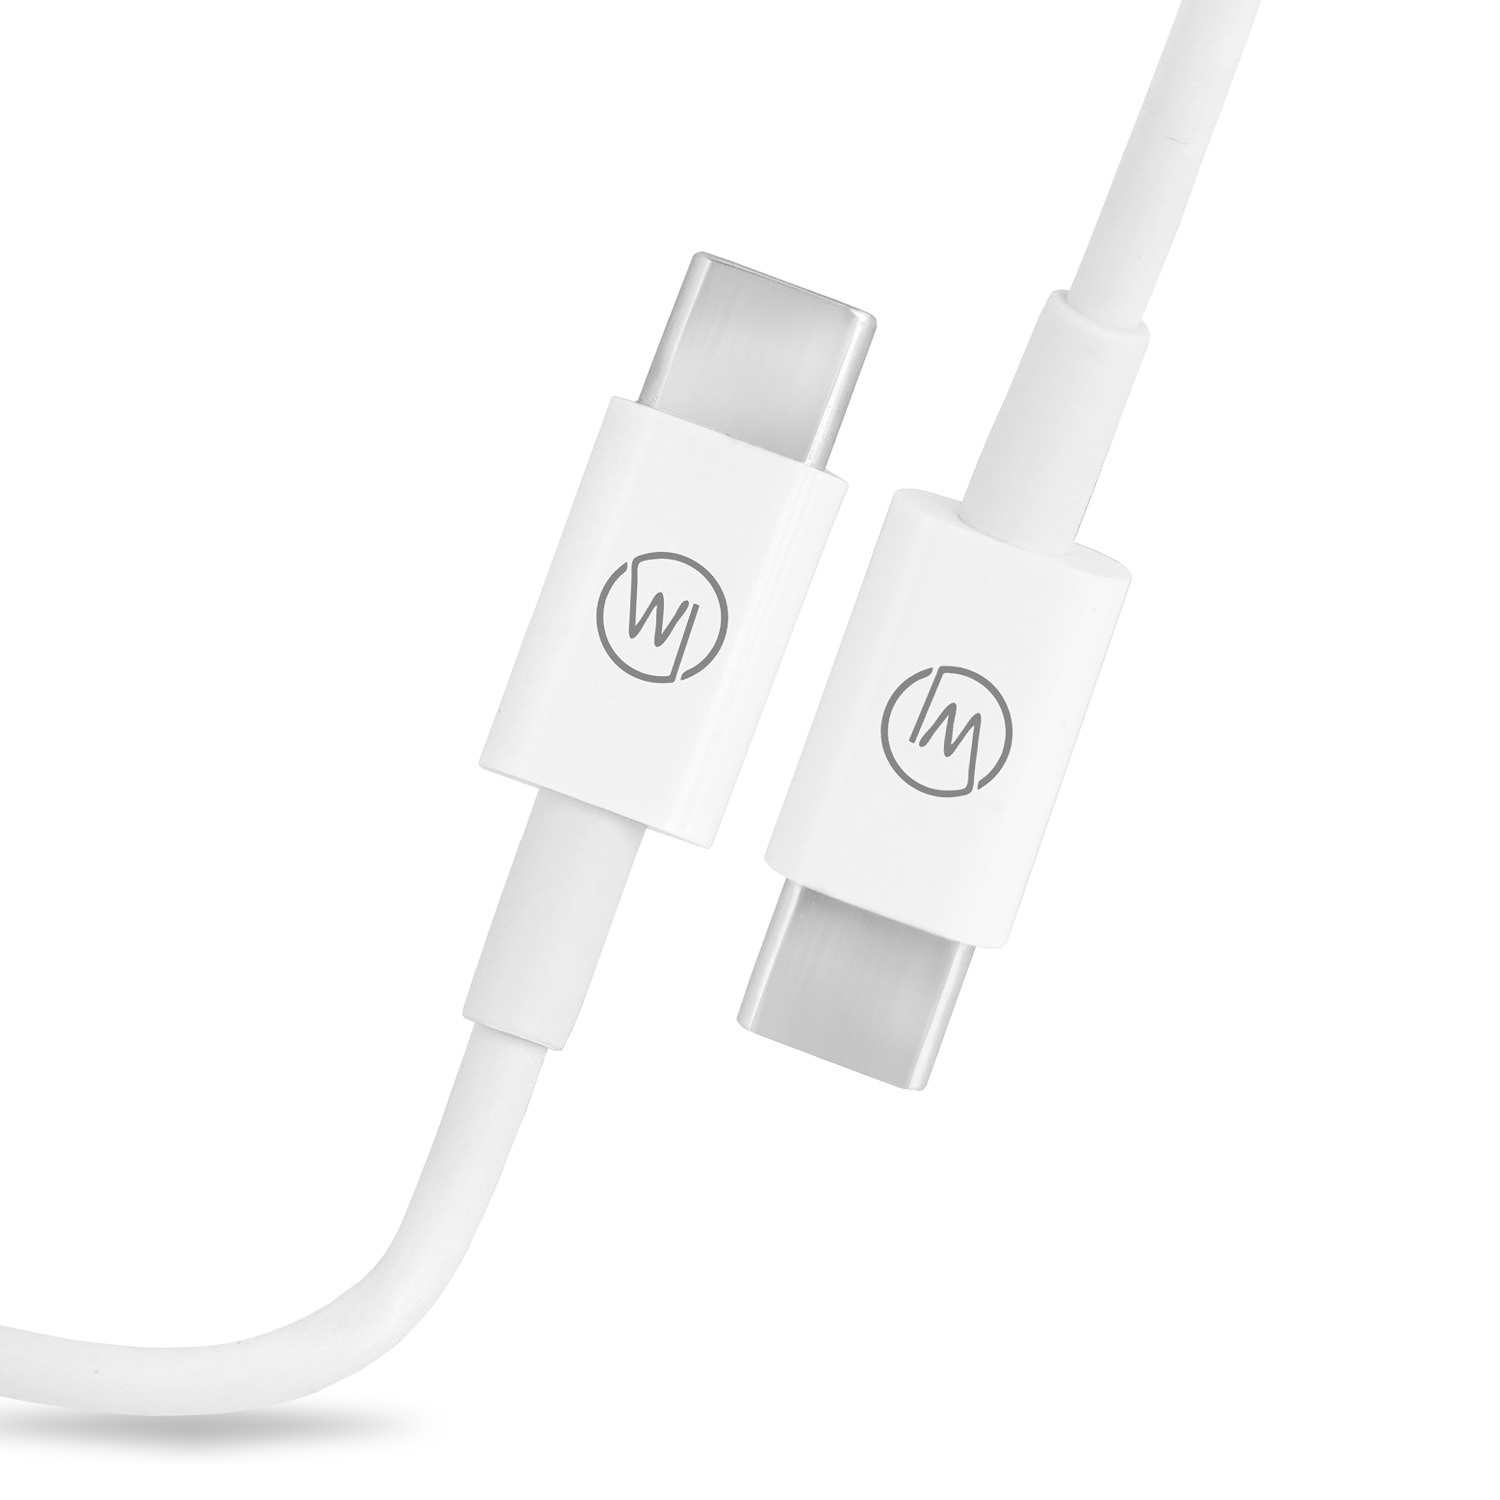 WICKED CHILI 3x USB m, / (1m iPad und 1 MacBook Ladekabel, Fast 60W) USB-C Pro / Charge Air, 20V / auf 3A für Ladekabel weiss Kabel C